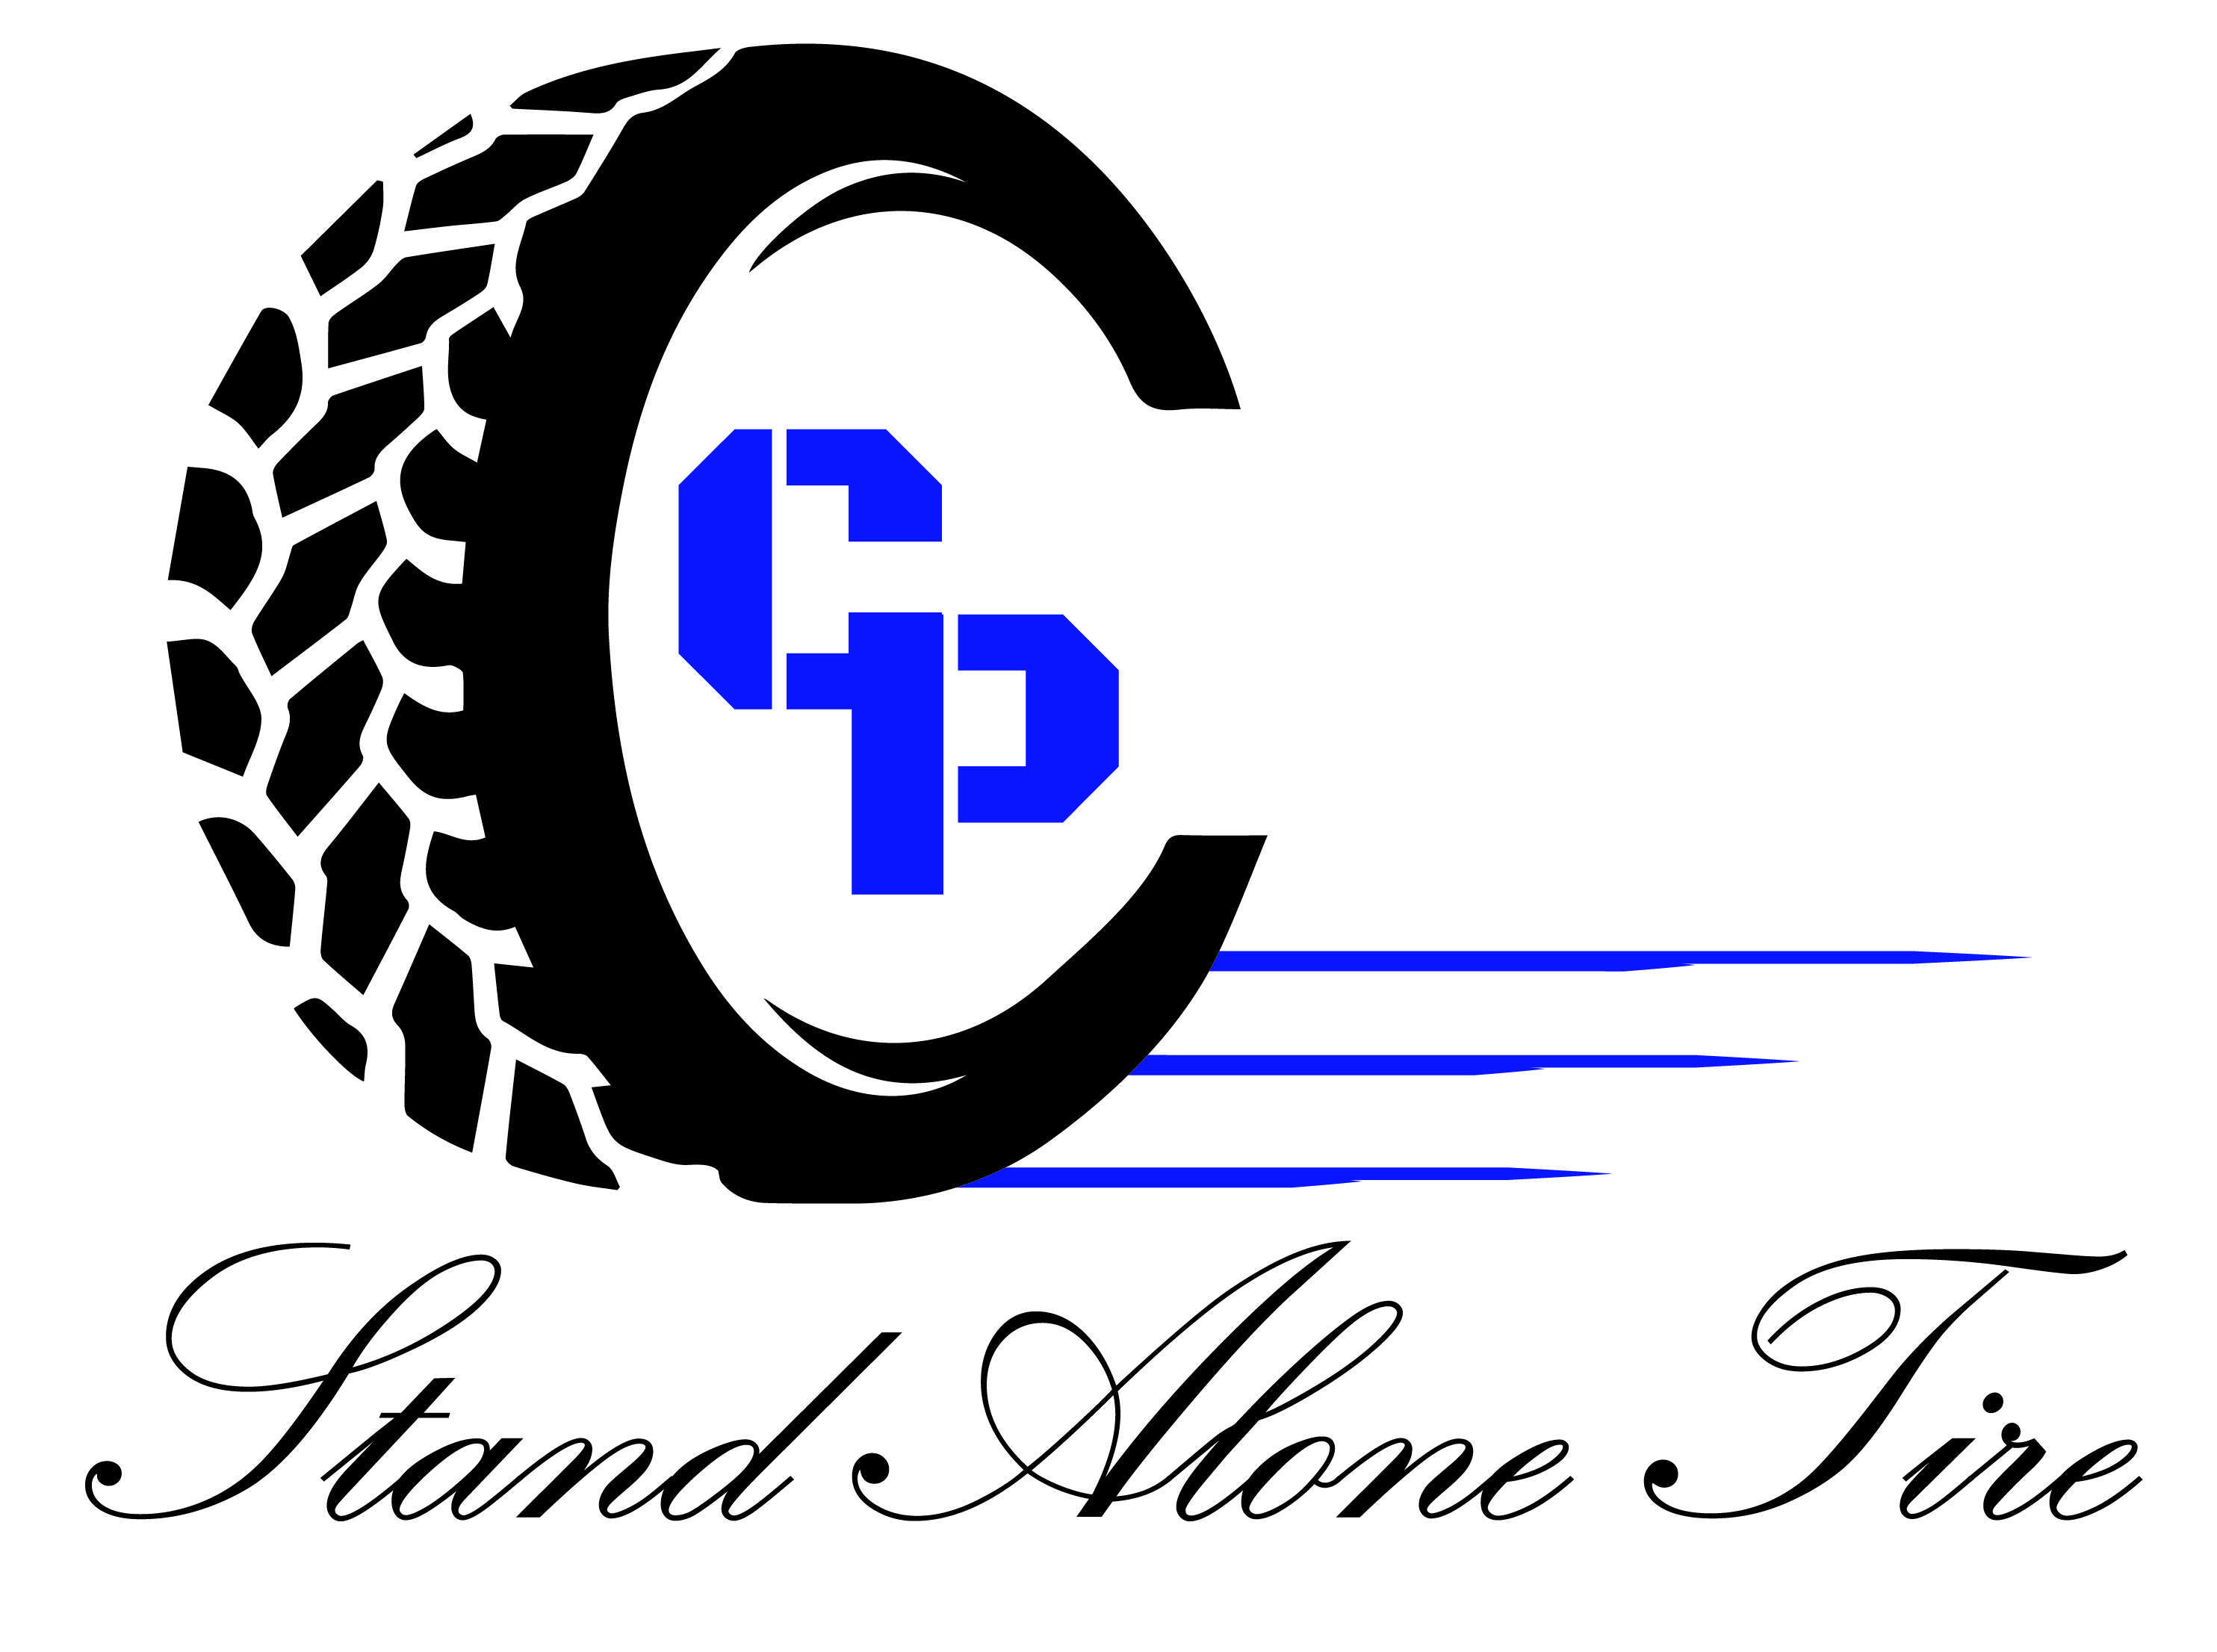 CP Stand Alone Tire 